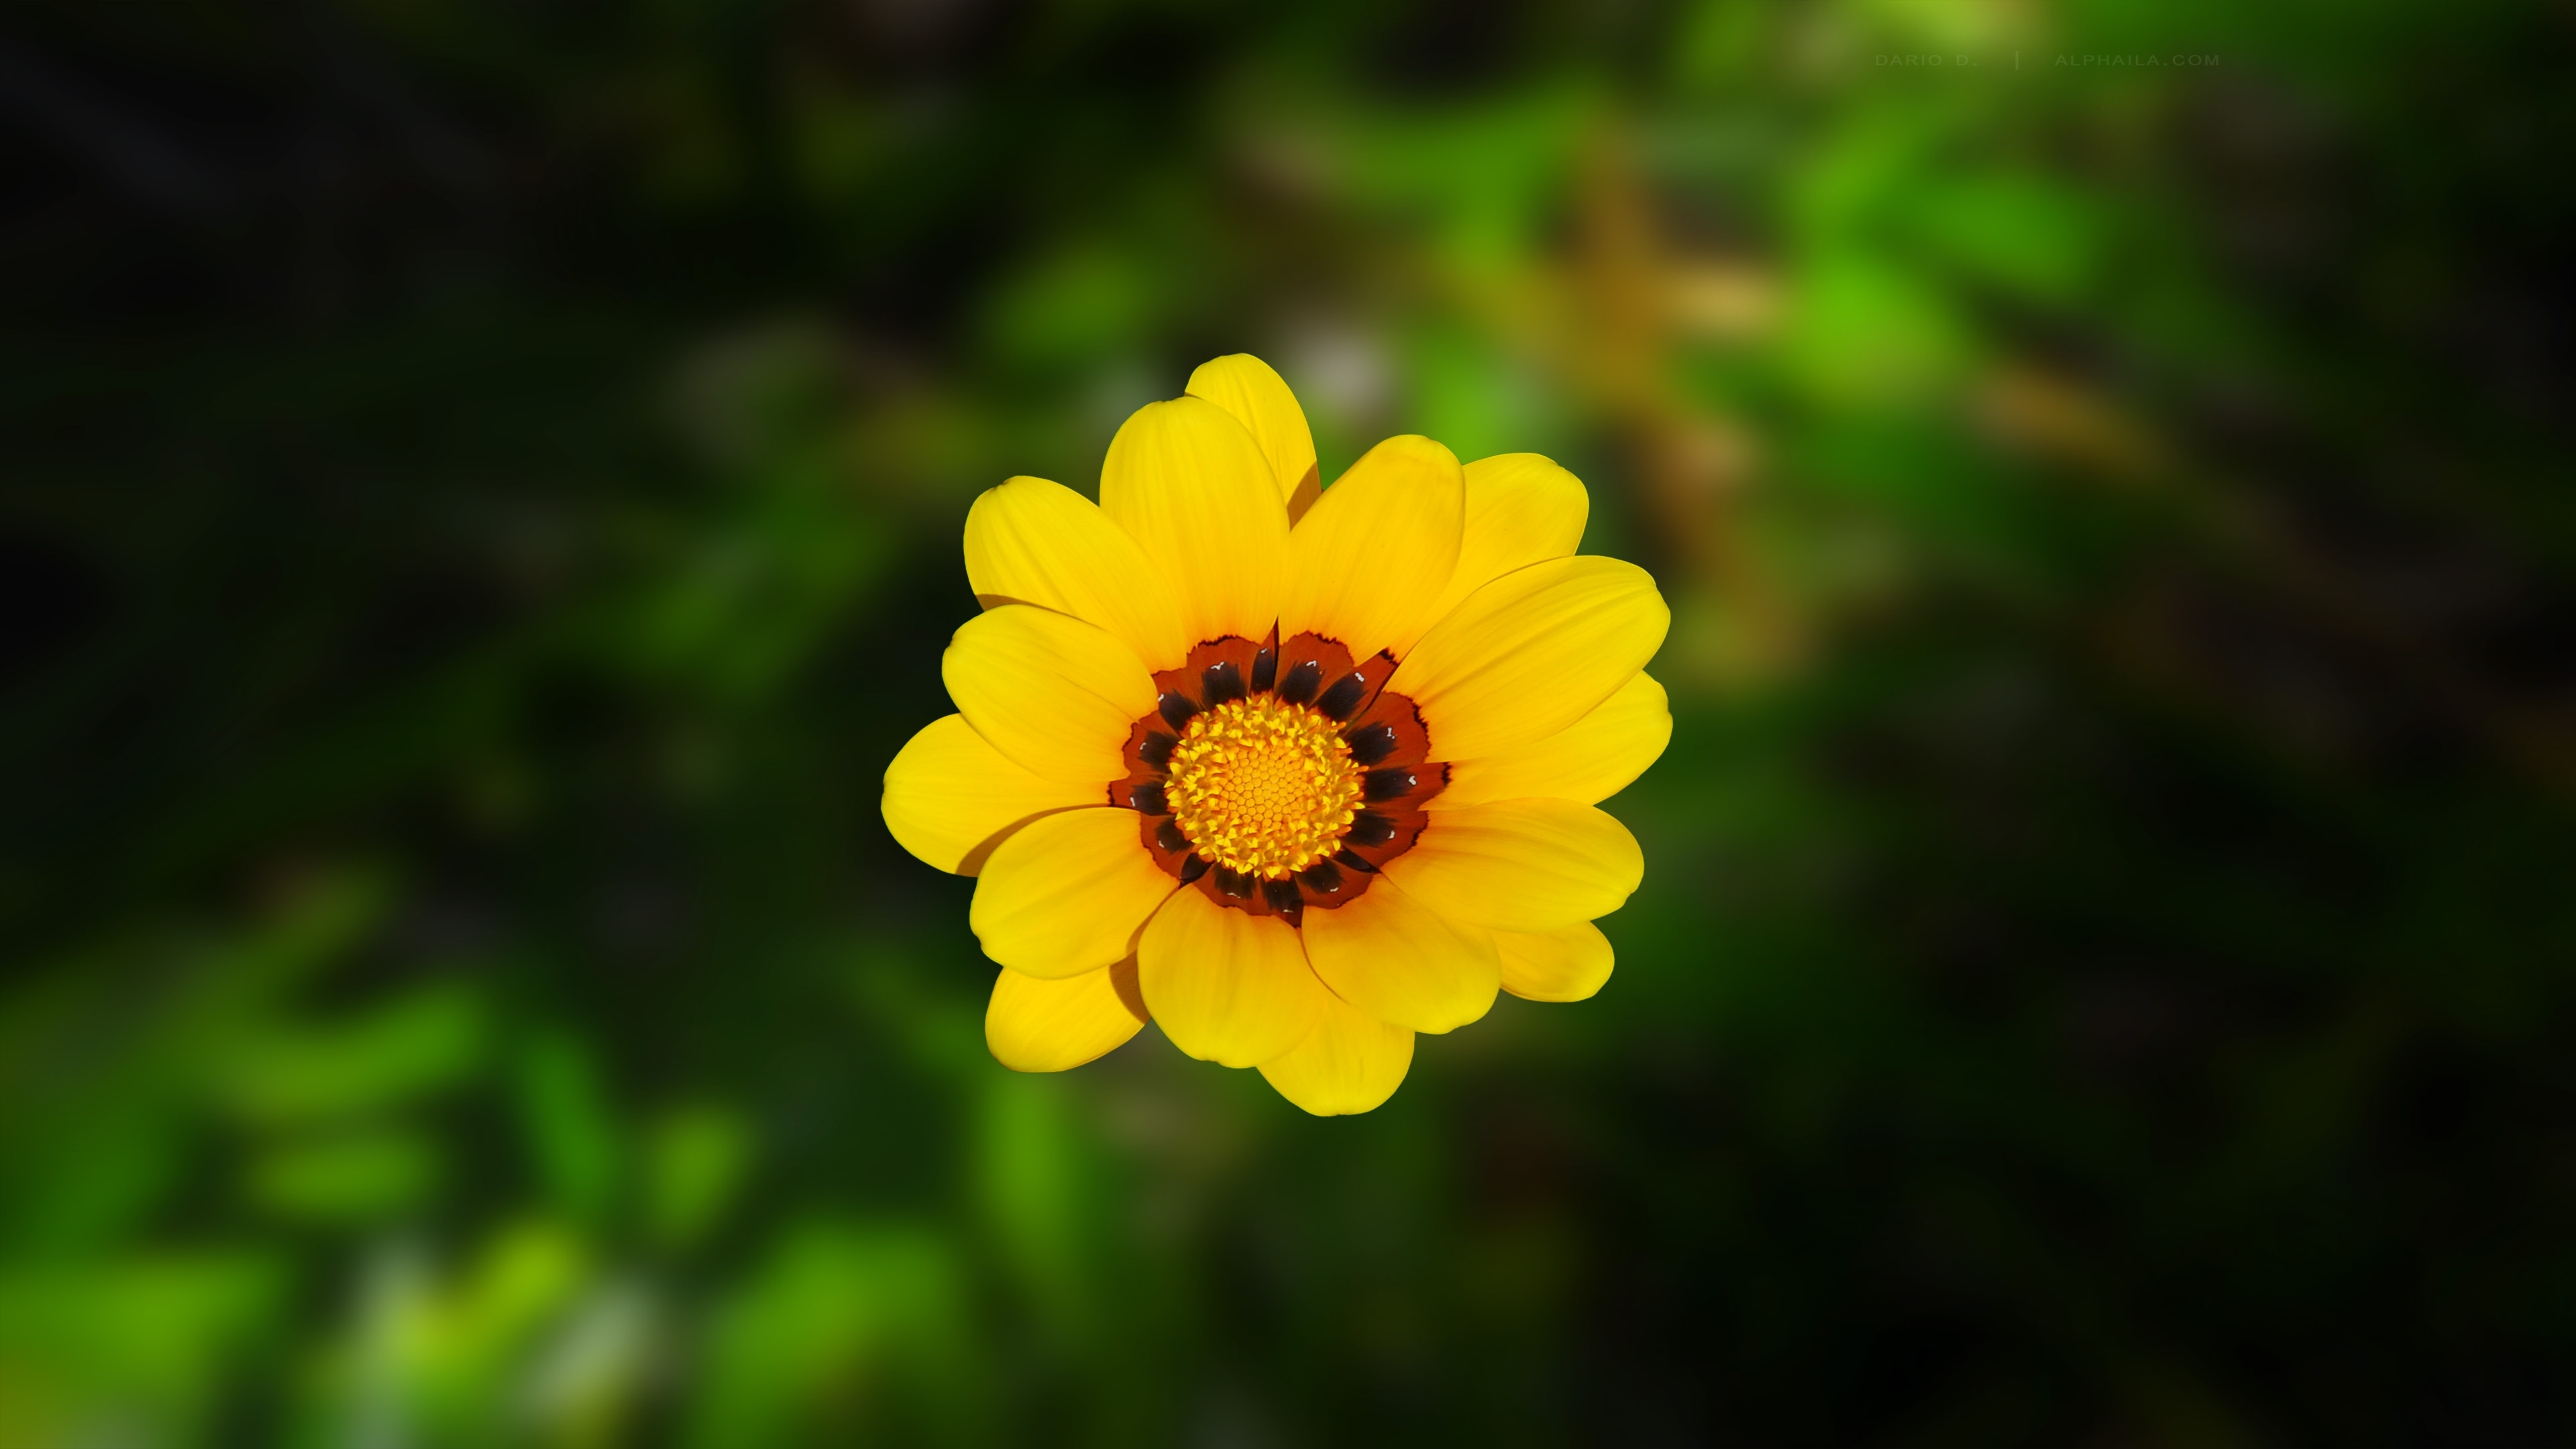 Flower 4k Ultra HD Wallpaper | Background Image | 3840x2160 | ID:556692 - Wallpaper Abyss